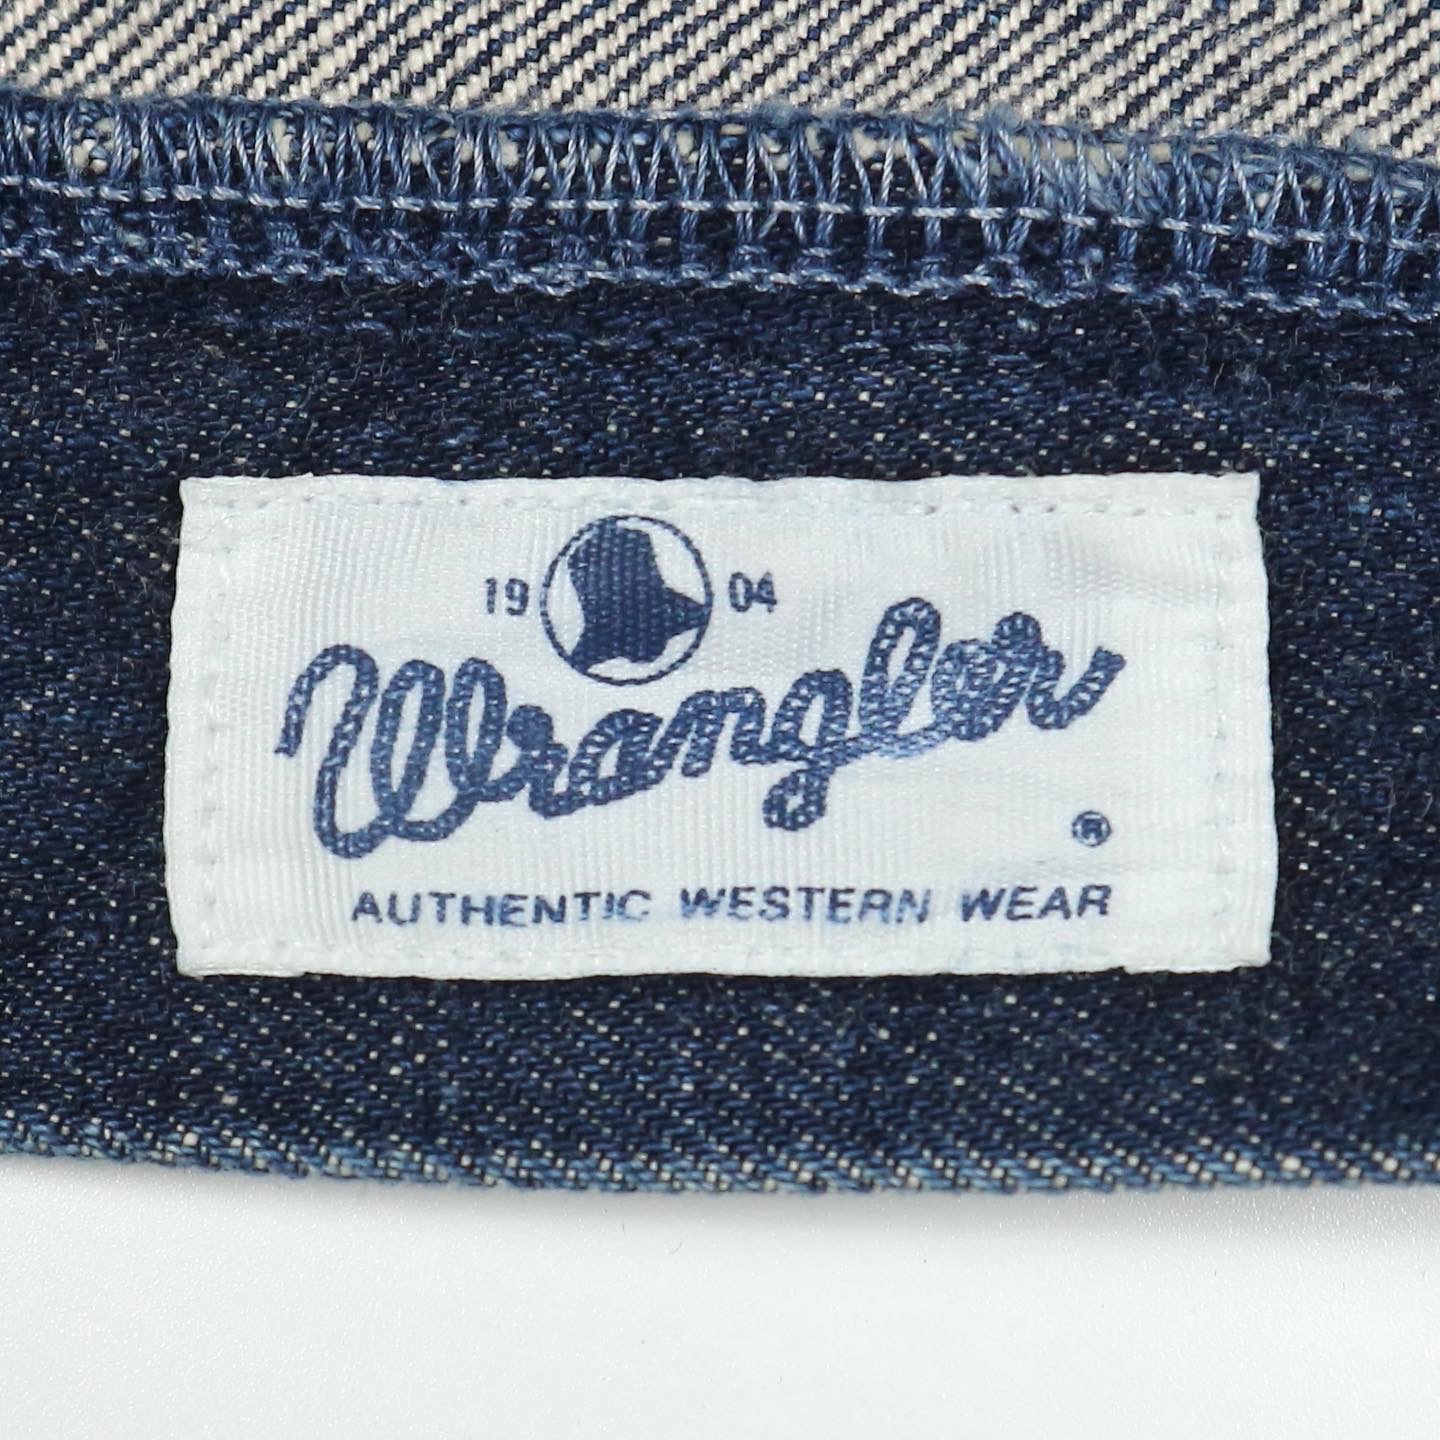 Wrangler Japan Selvedge Denim Jeans Size 29